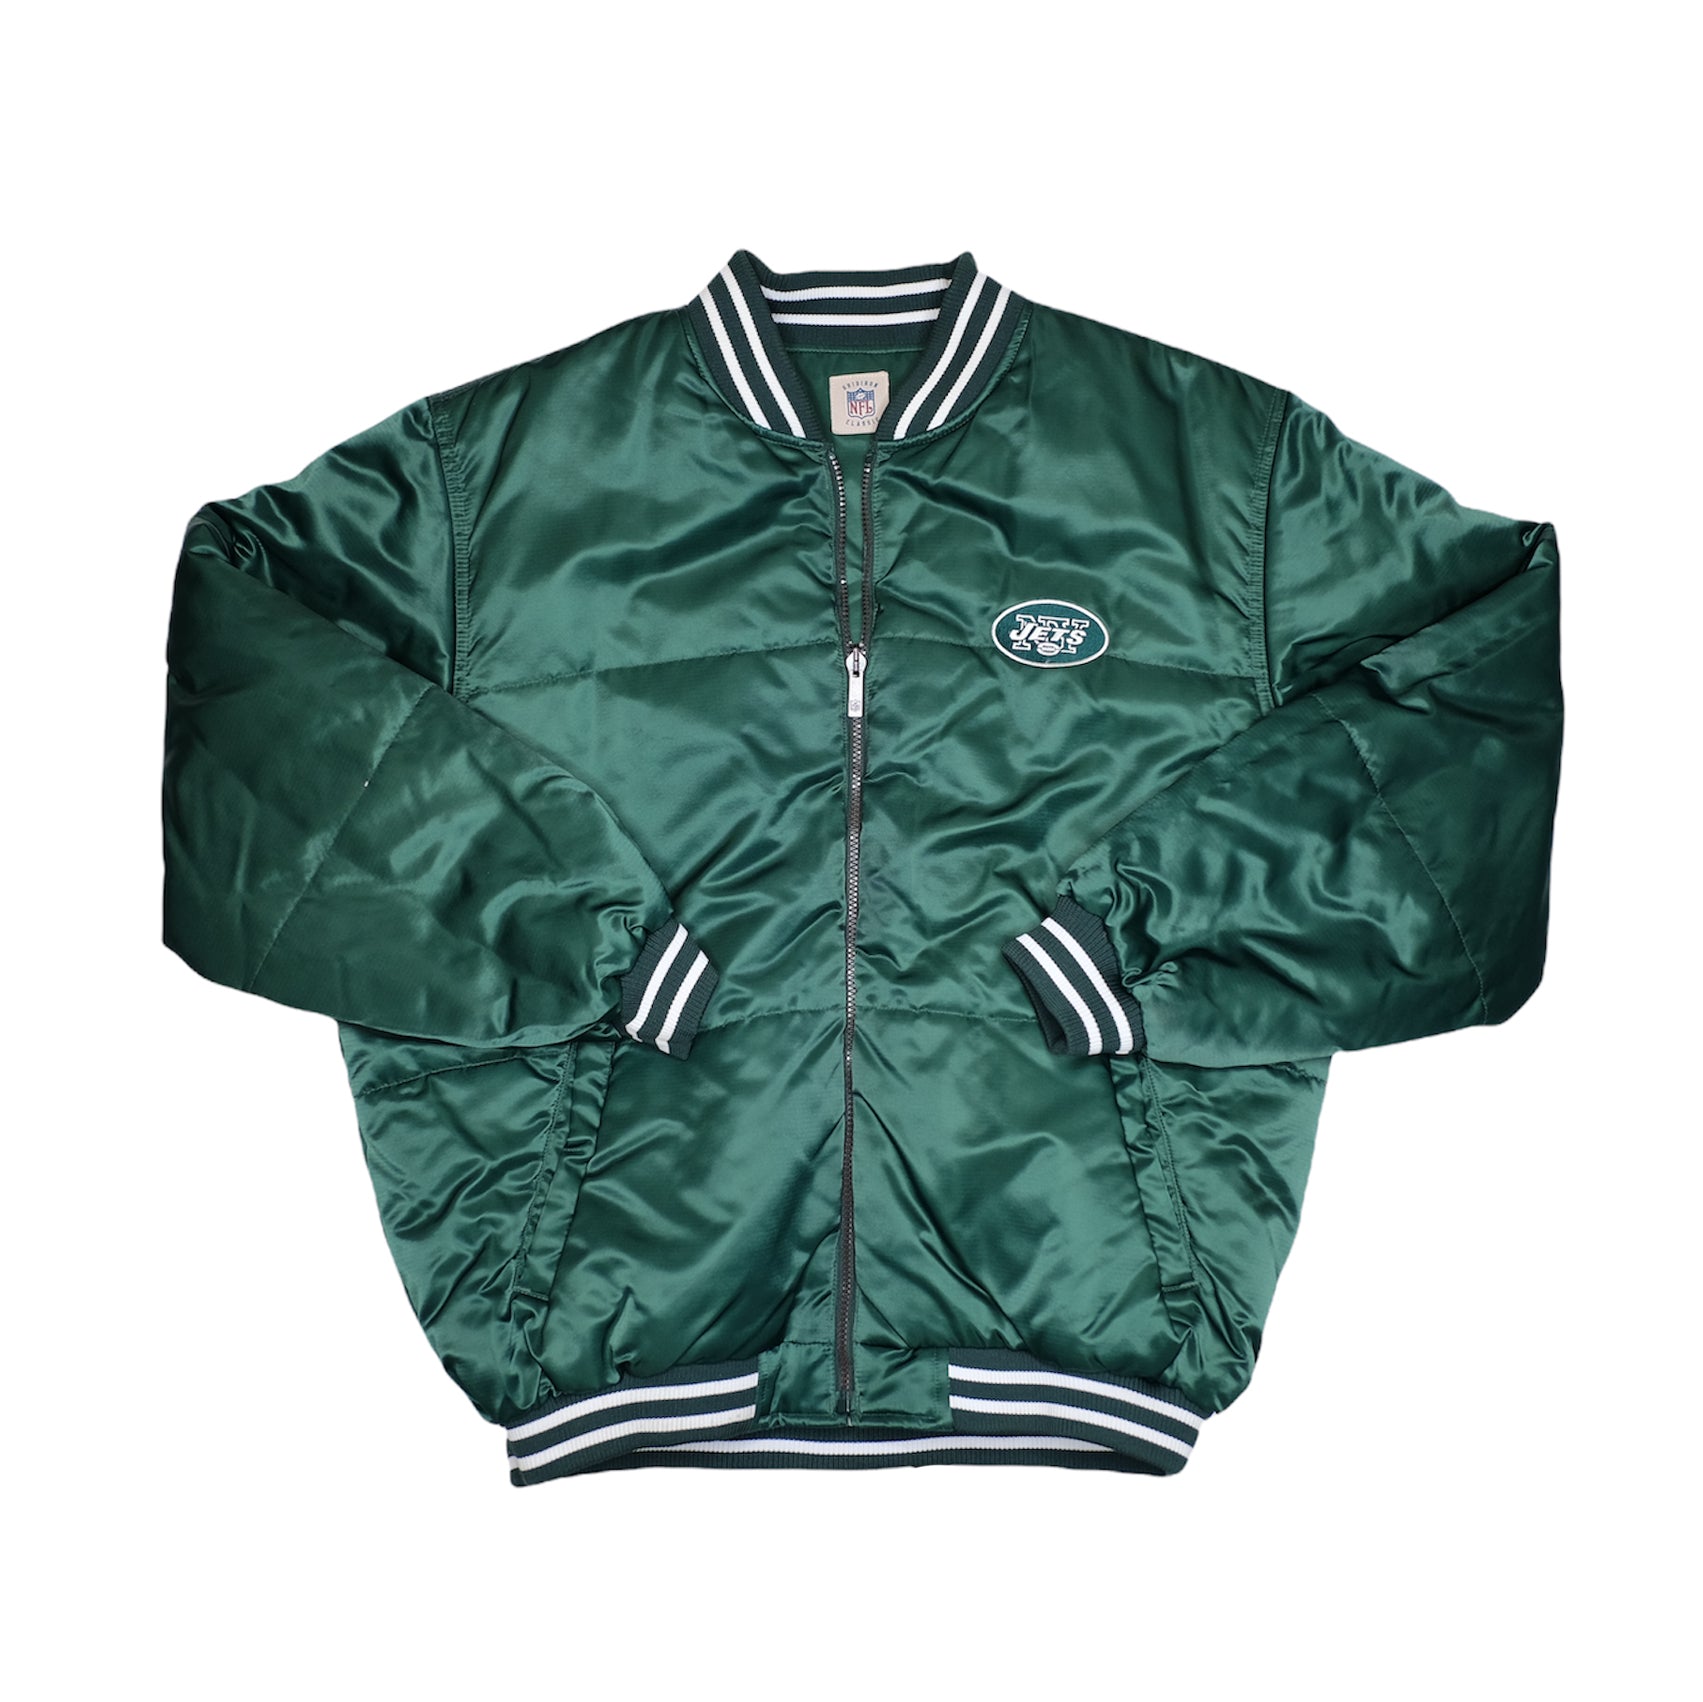 Vintage NFL Jets Varsity Jacket